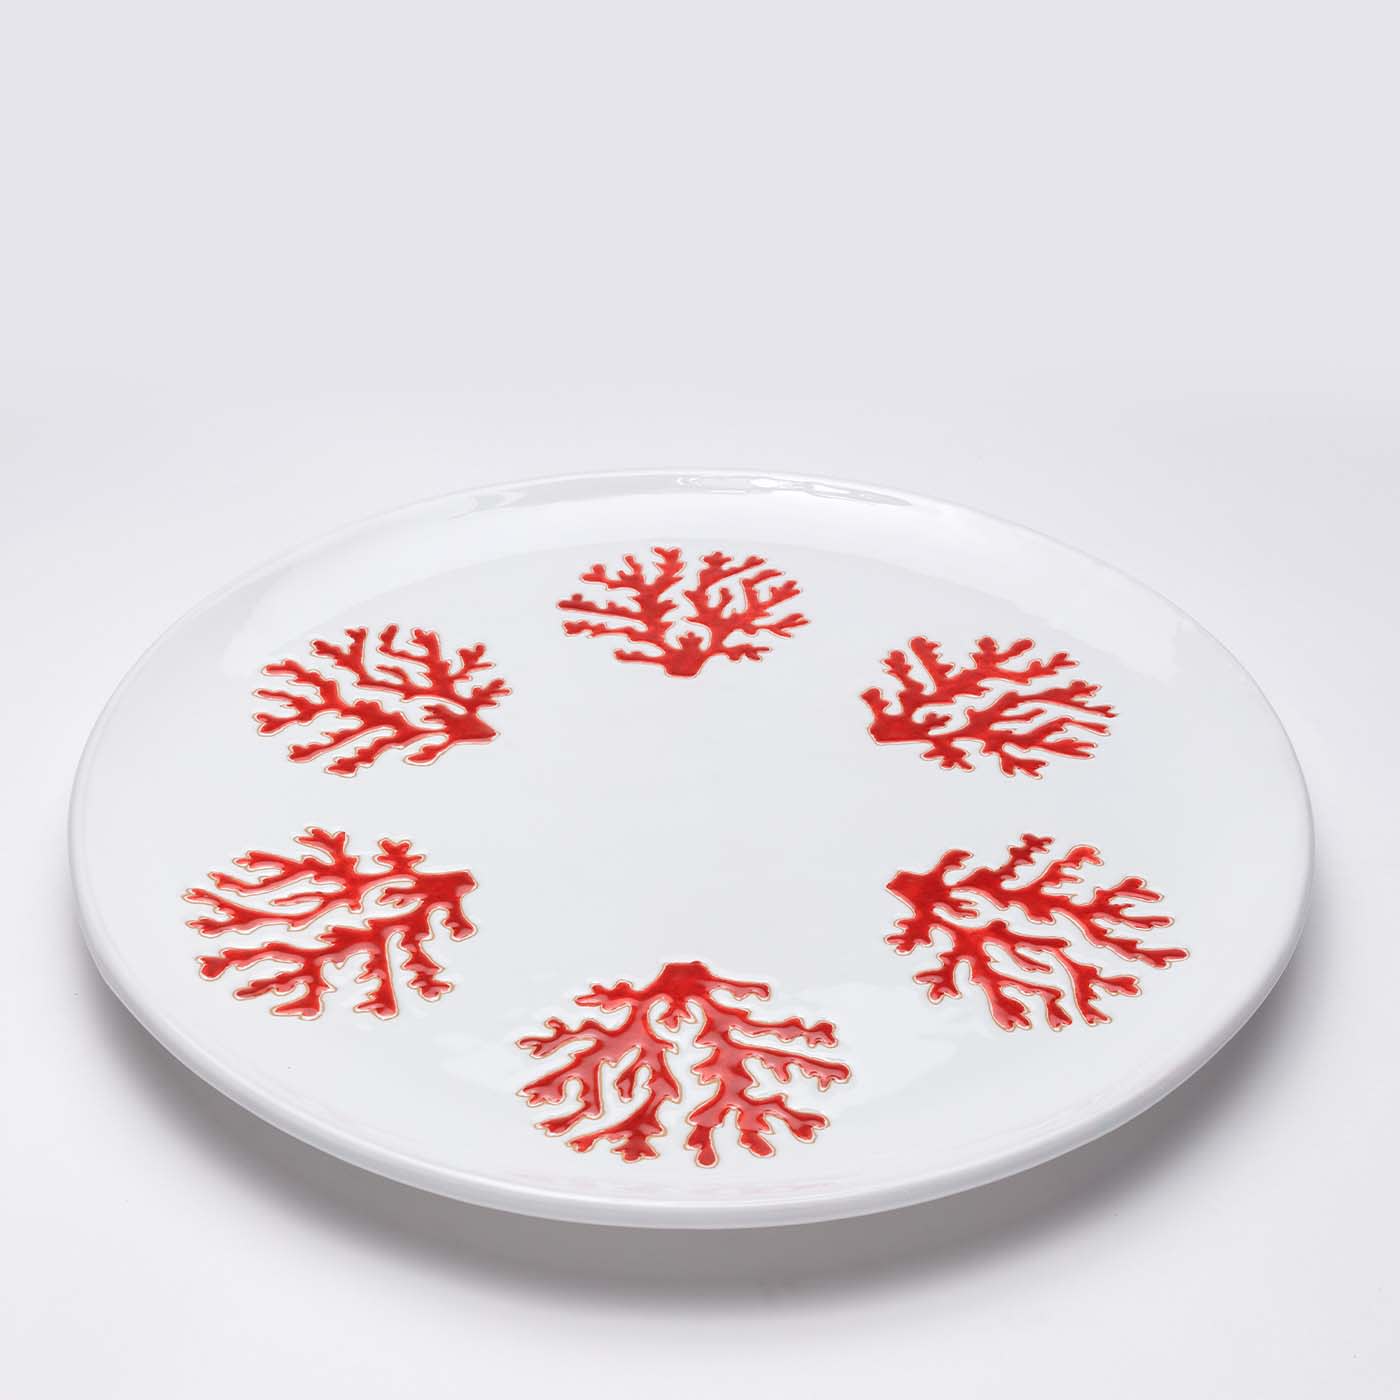 Corallo Rosso Large Platter - Cerasarda